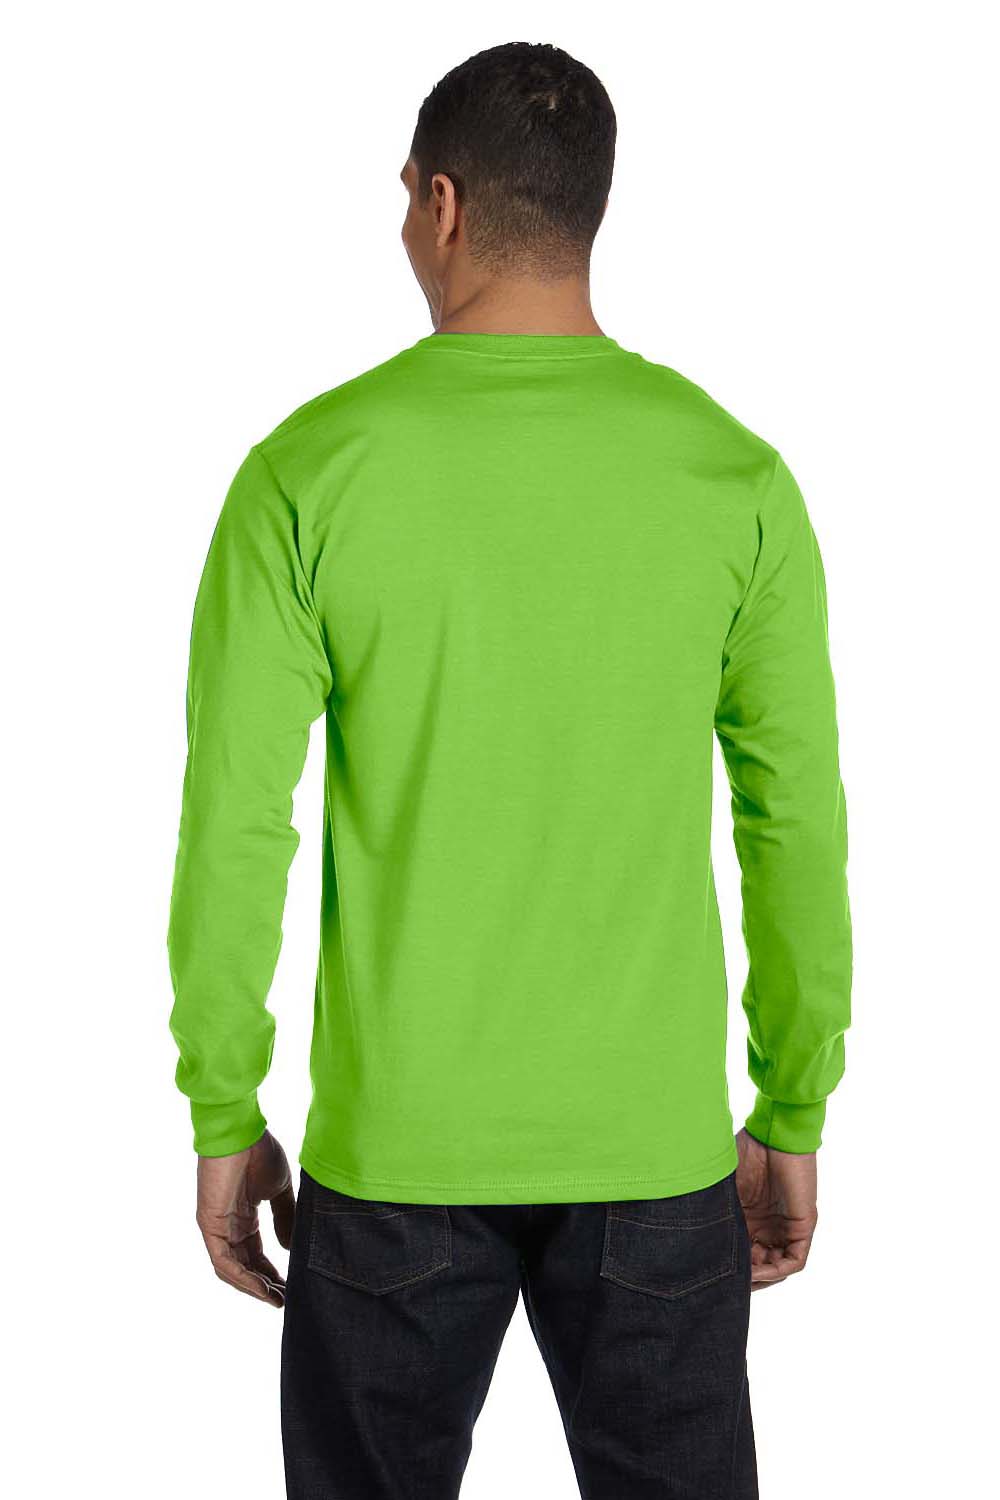 Hanes 5186 Mens Beefy-T Long Sleeve Crewneck T-Shirt Lime Green Back